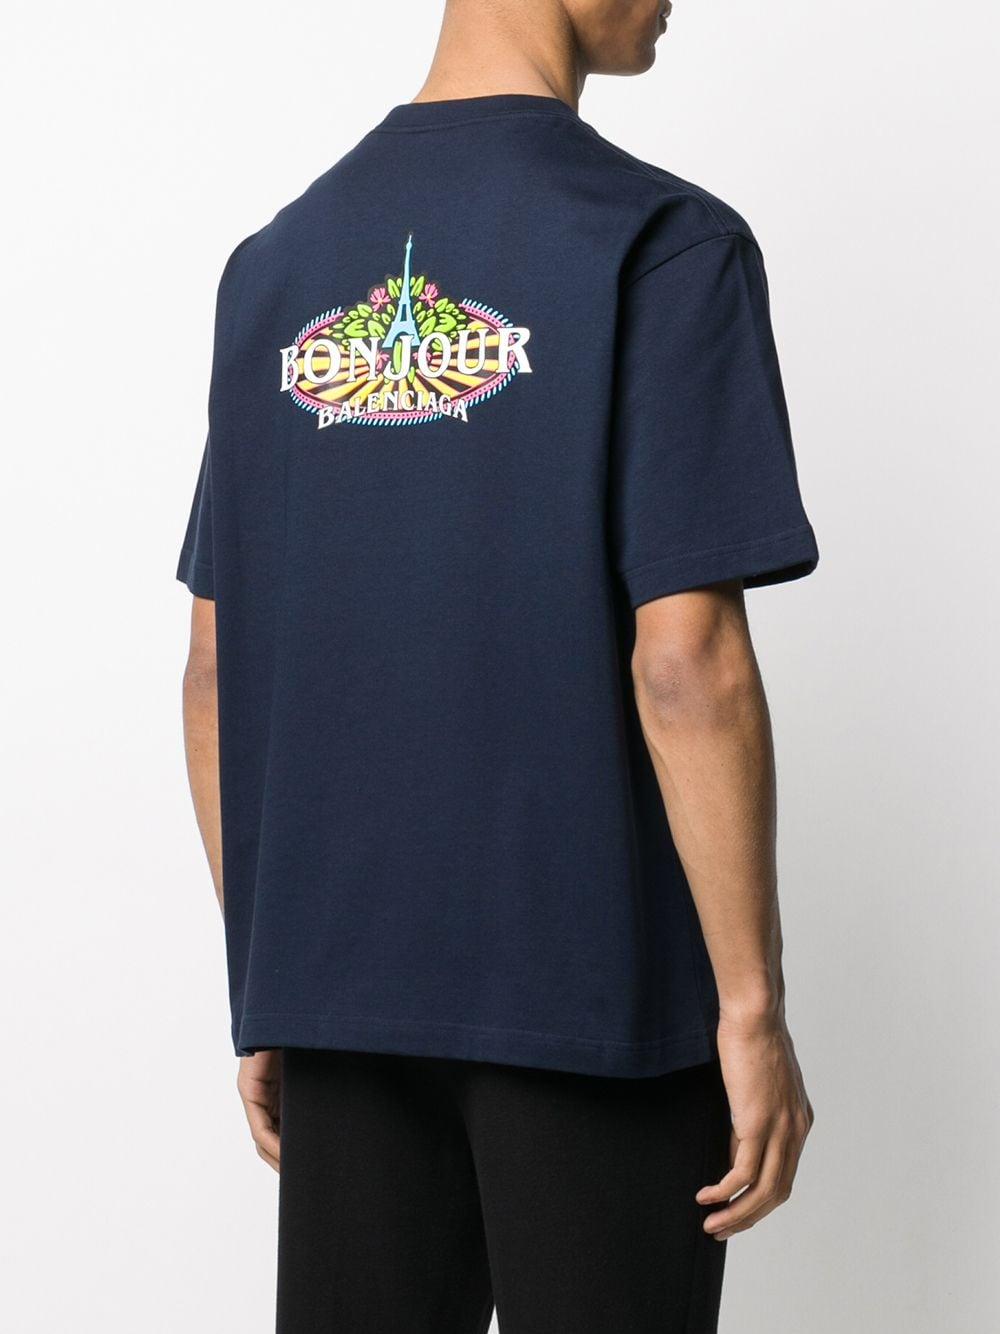 Balenciaga Logo Print T-shirt in Blue for Men - Lyst